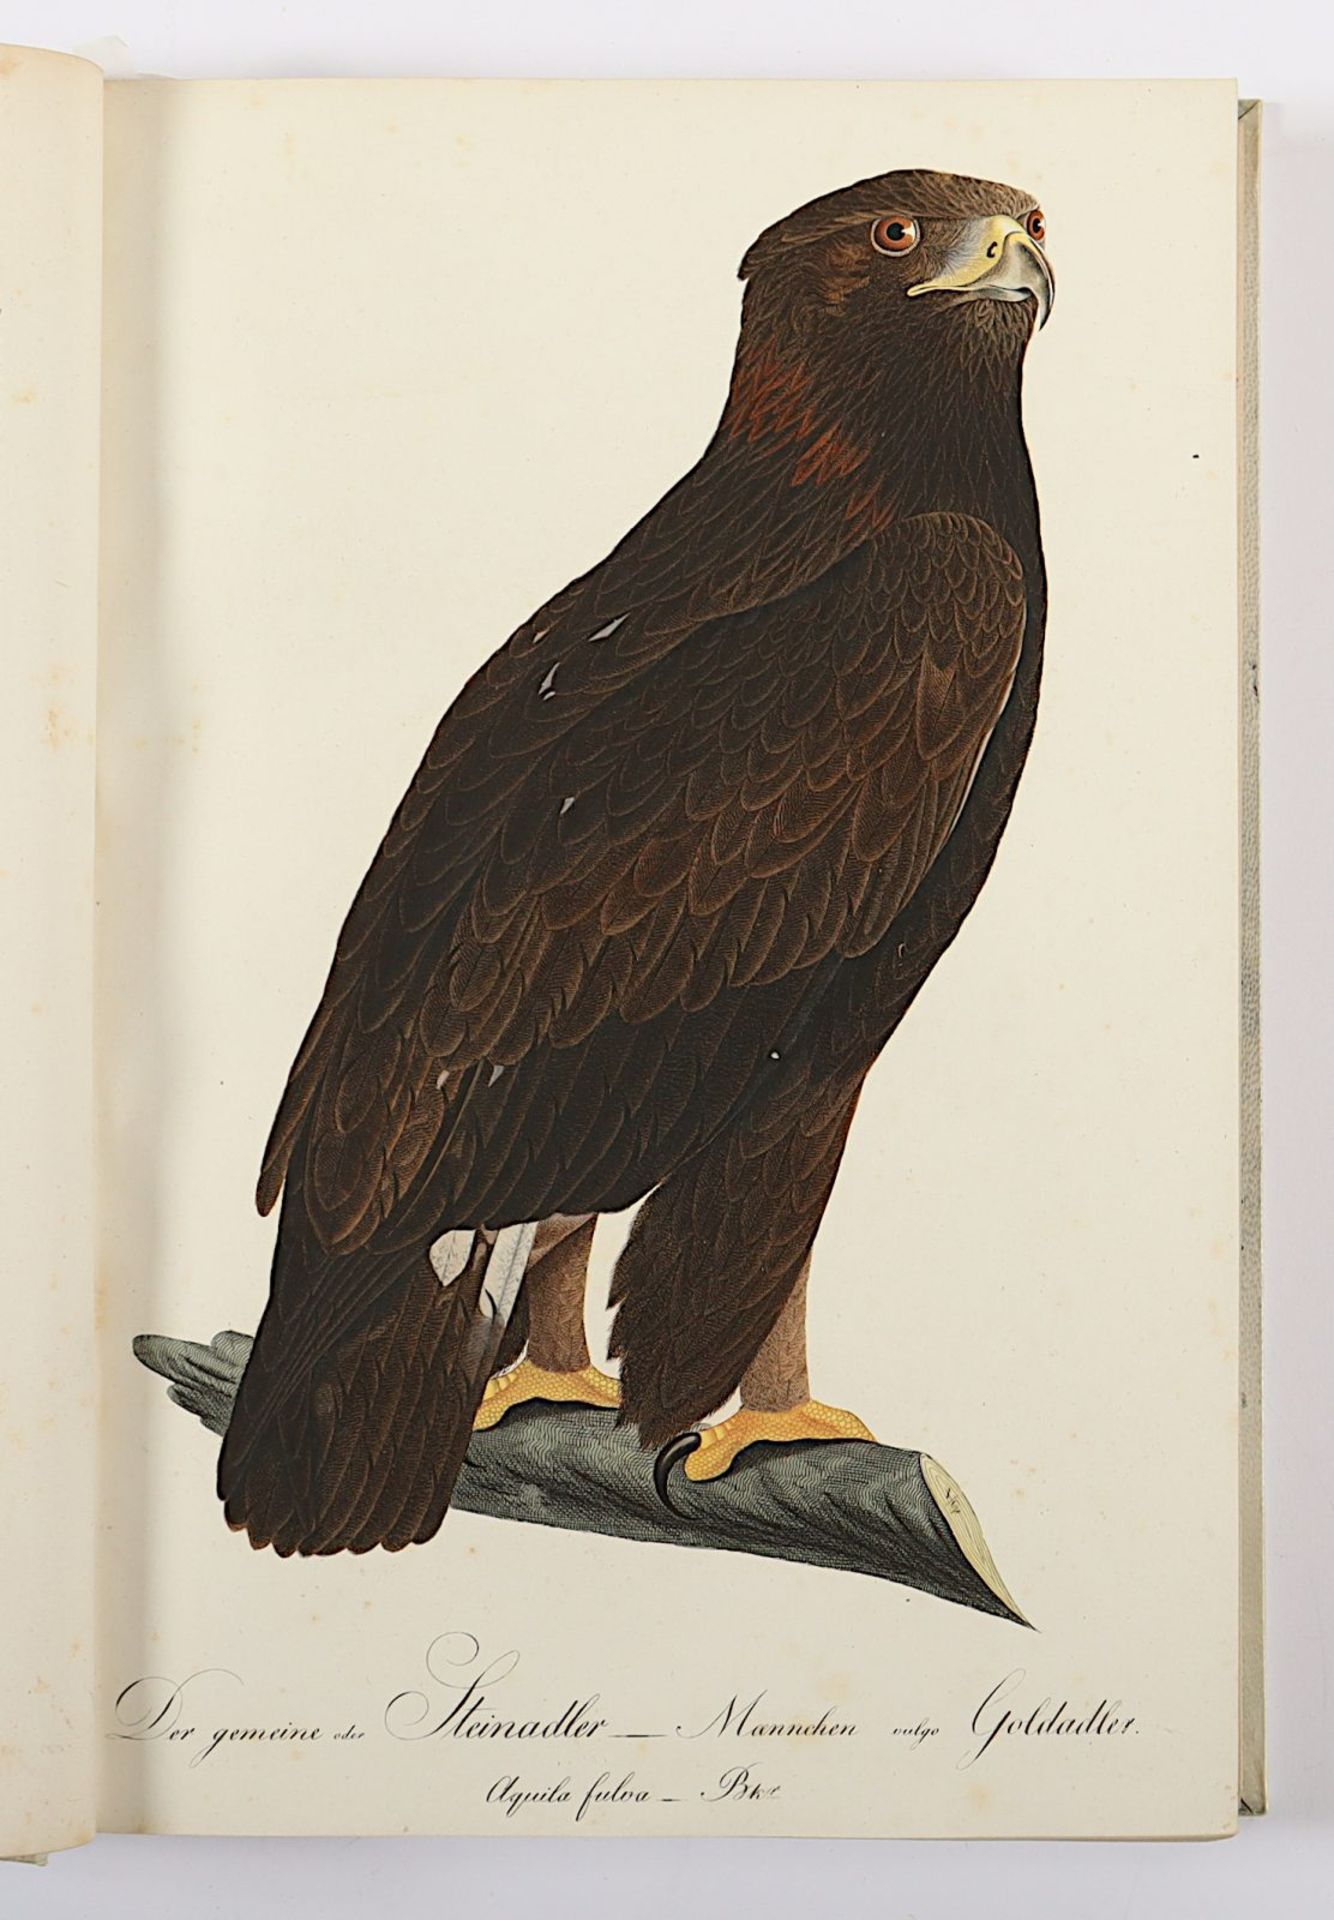 Teutsche Ornithologie, oder Naturgeschichte aller Vögel Teutschlands - Image 3 of 13